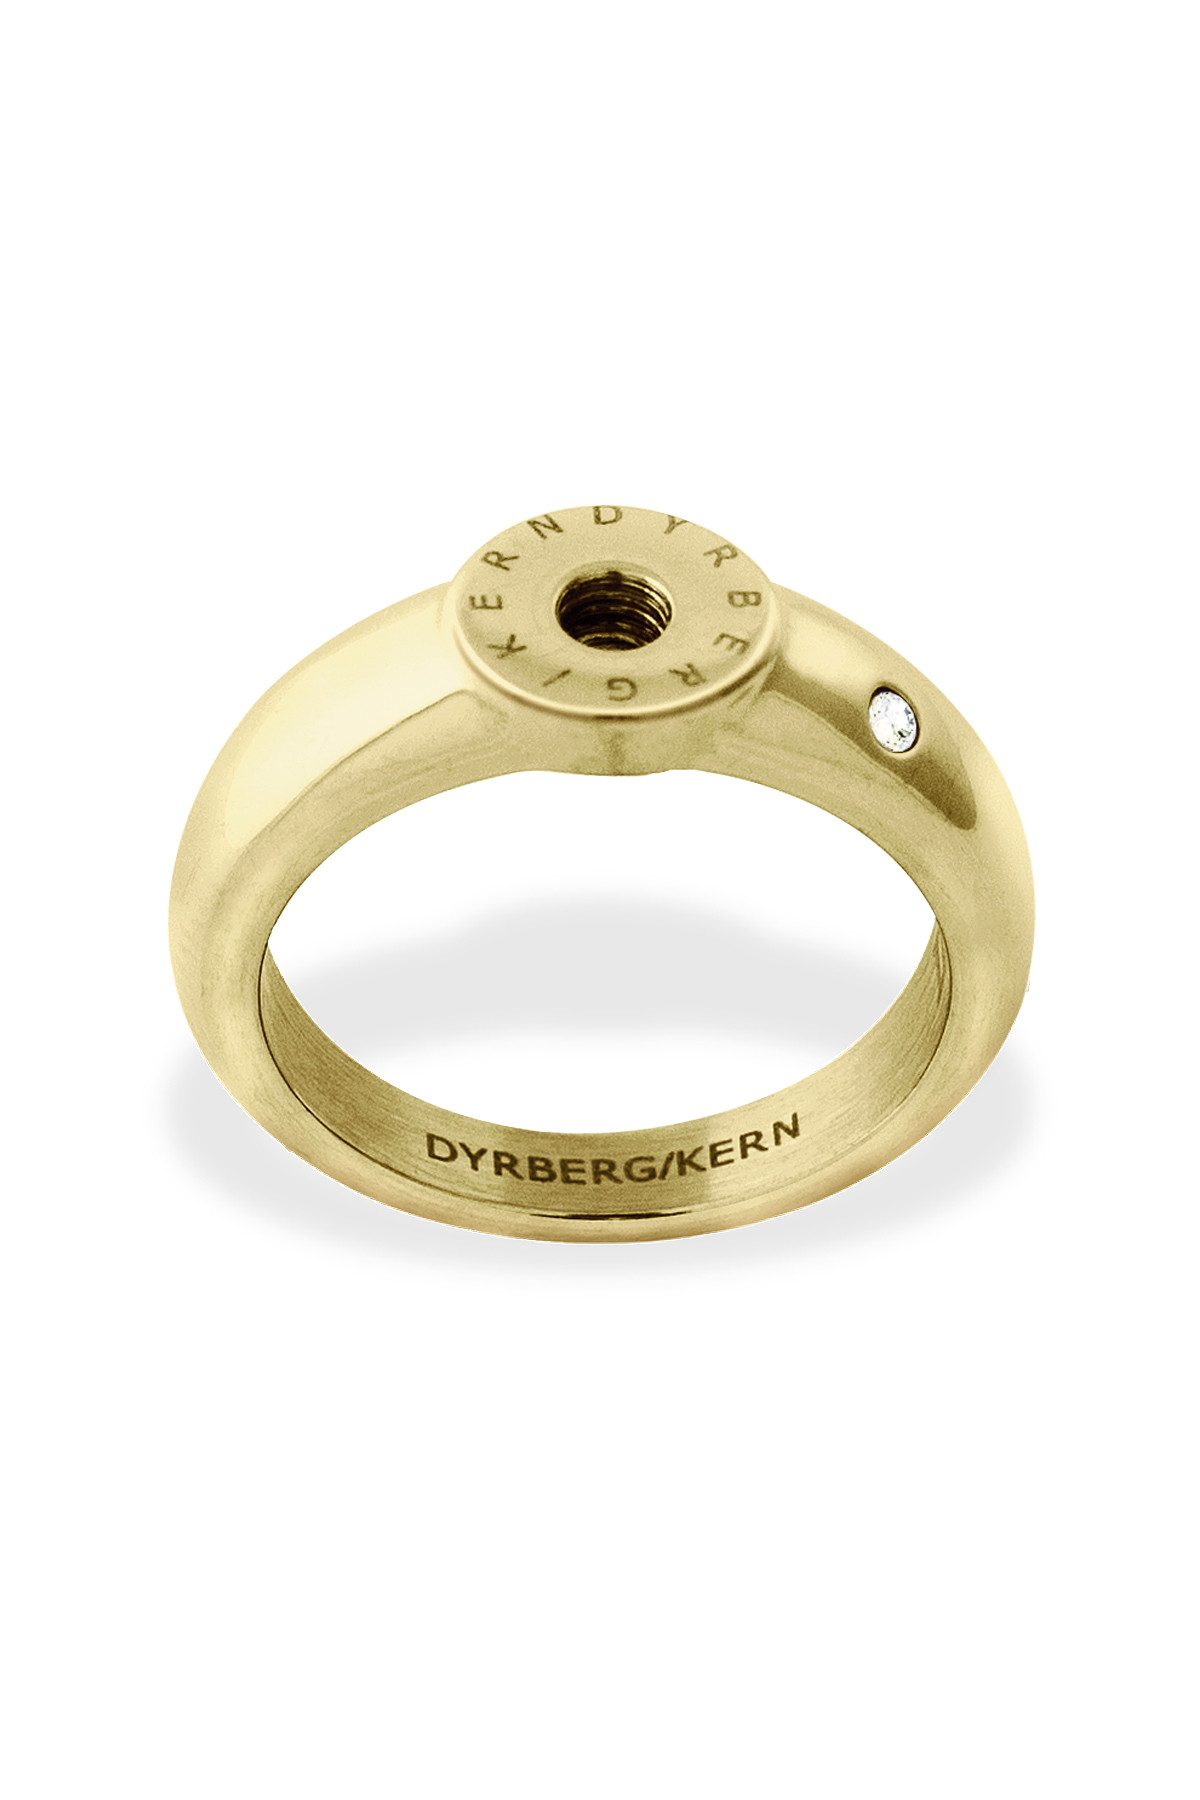 DYRBERG/KERN RING 3 RING 343082 (Gold, Crystal, 0/48)